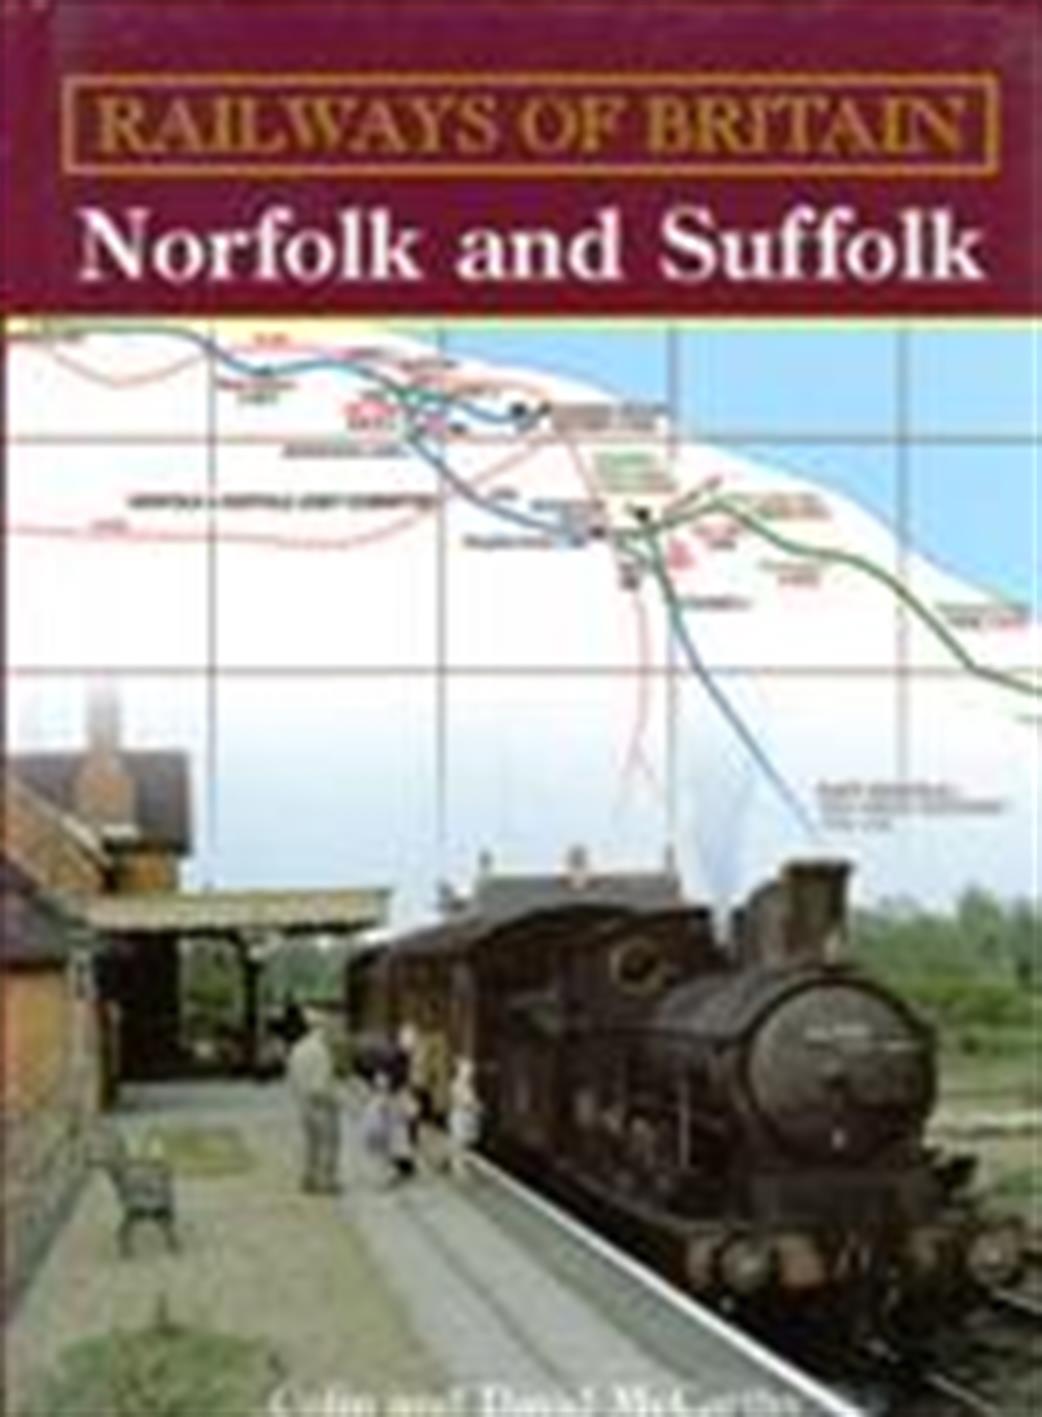 Ian Allan Publishing  9780711032231 Norfolk and Suffolk by Colin & David McCarthy